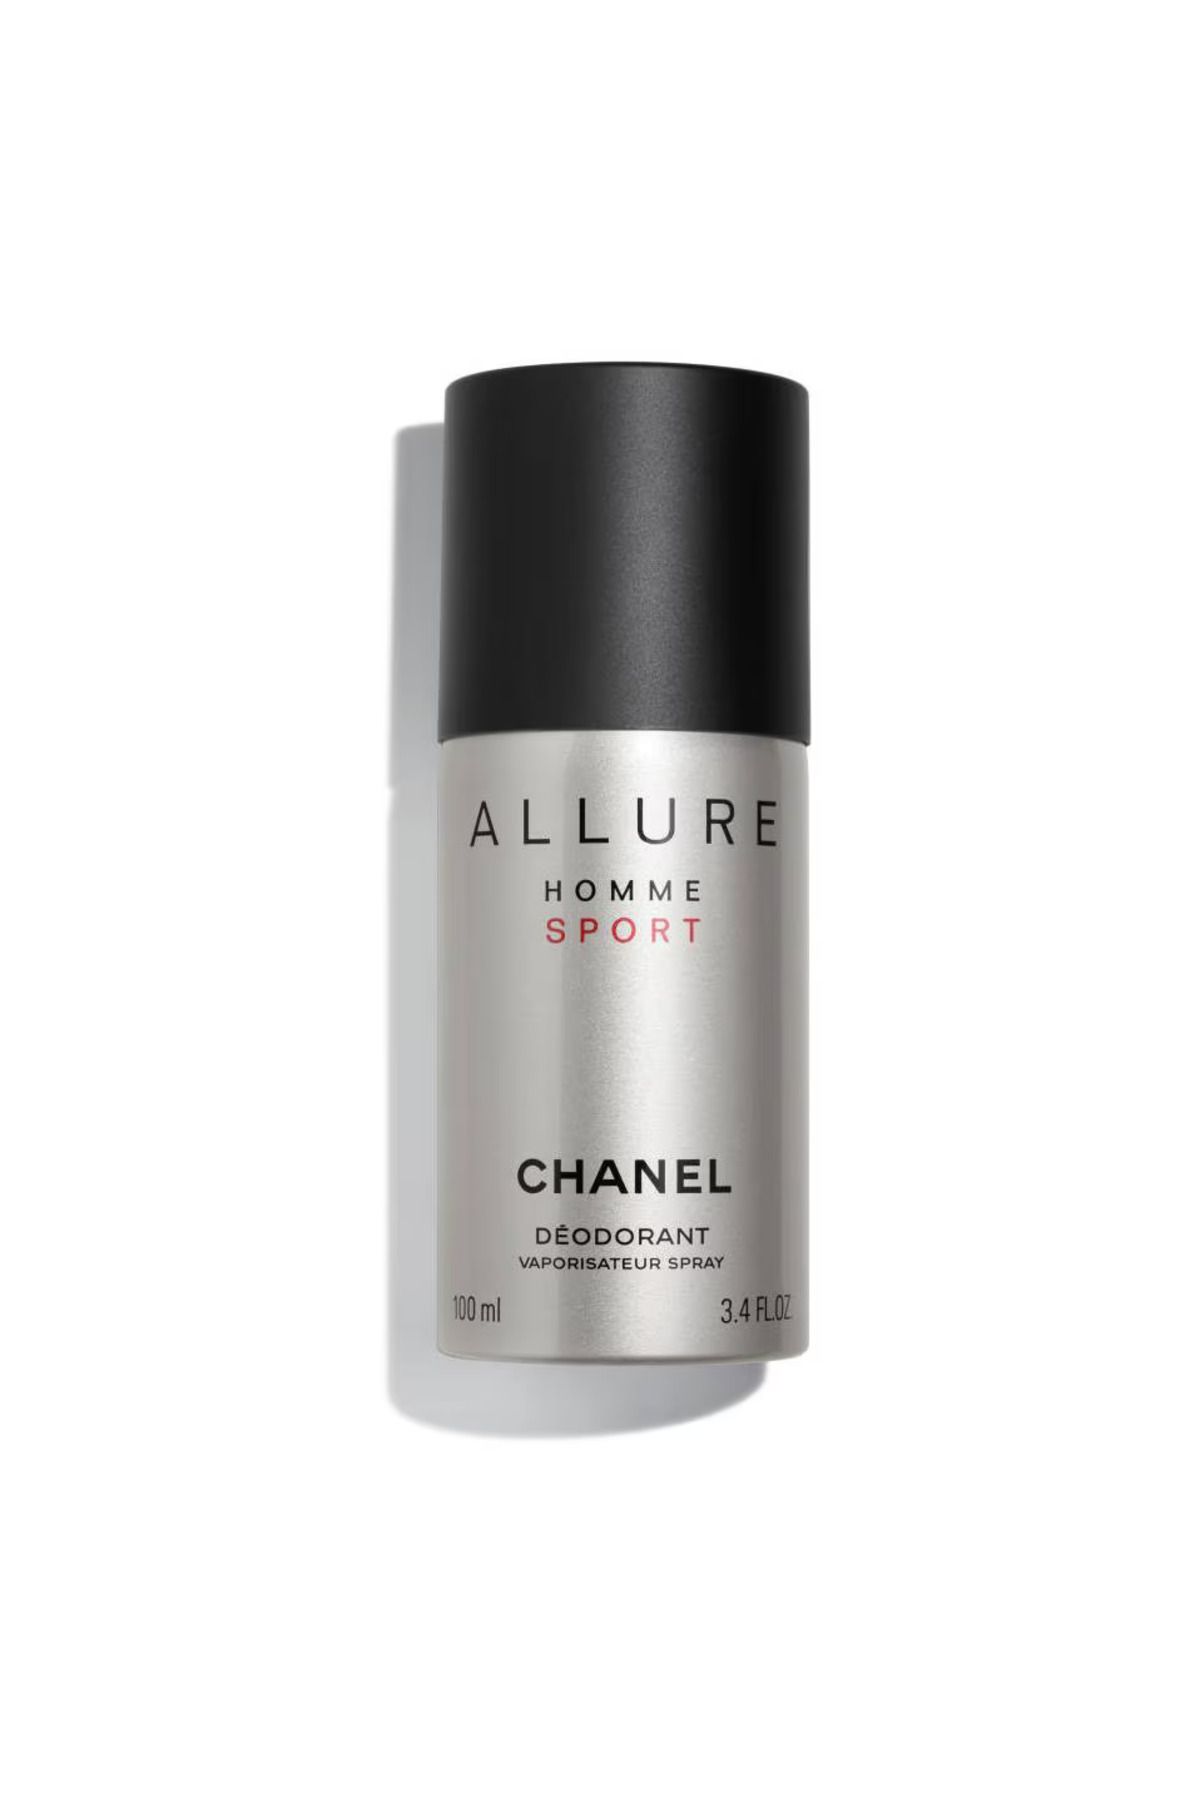 Chanel ALLURE HOMME SPORT Deodorant-100ml